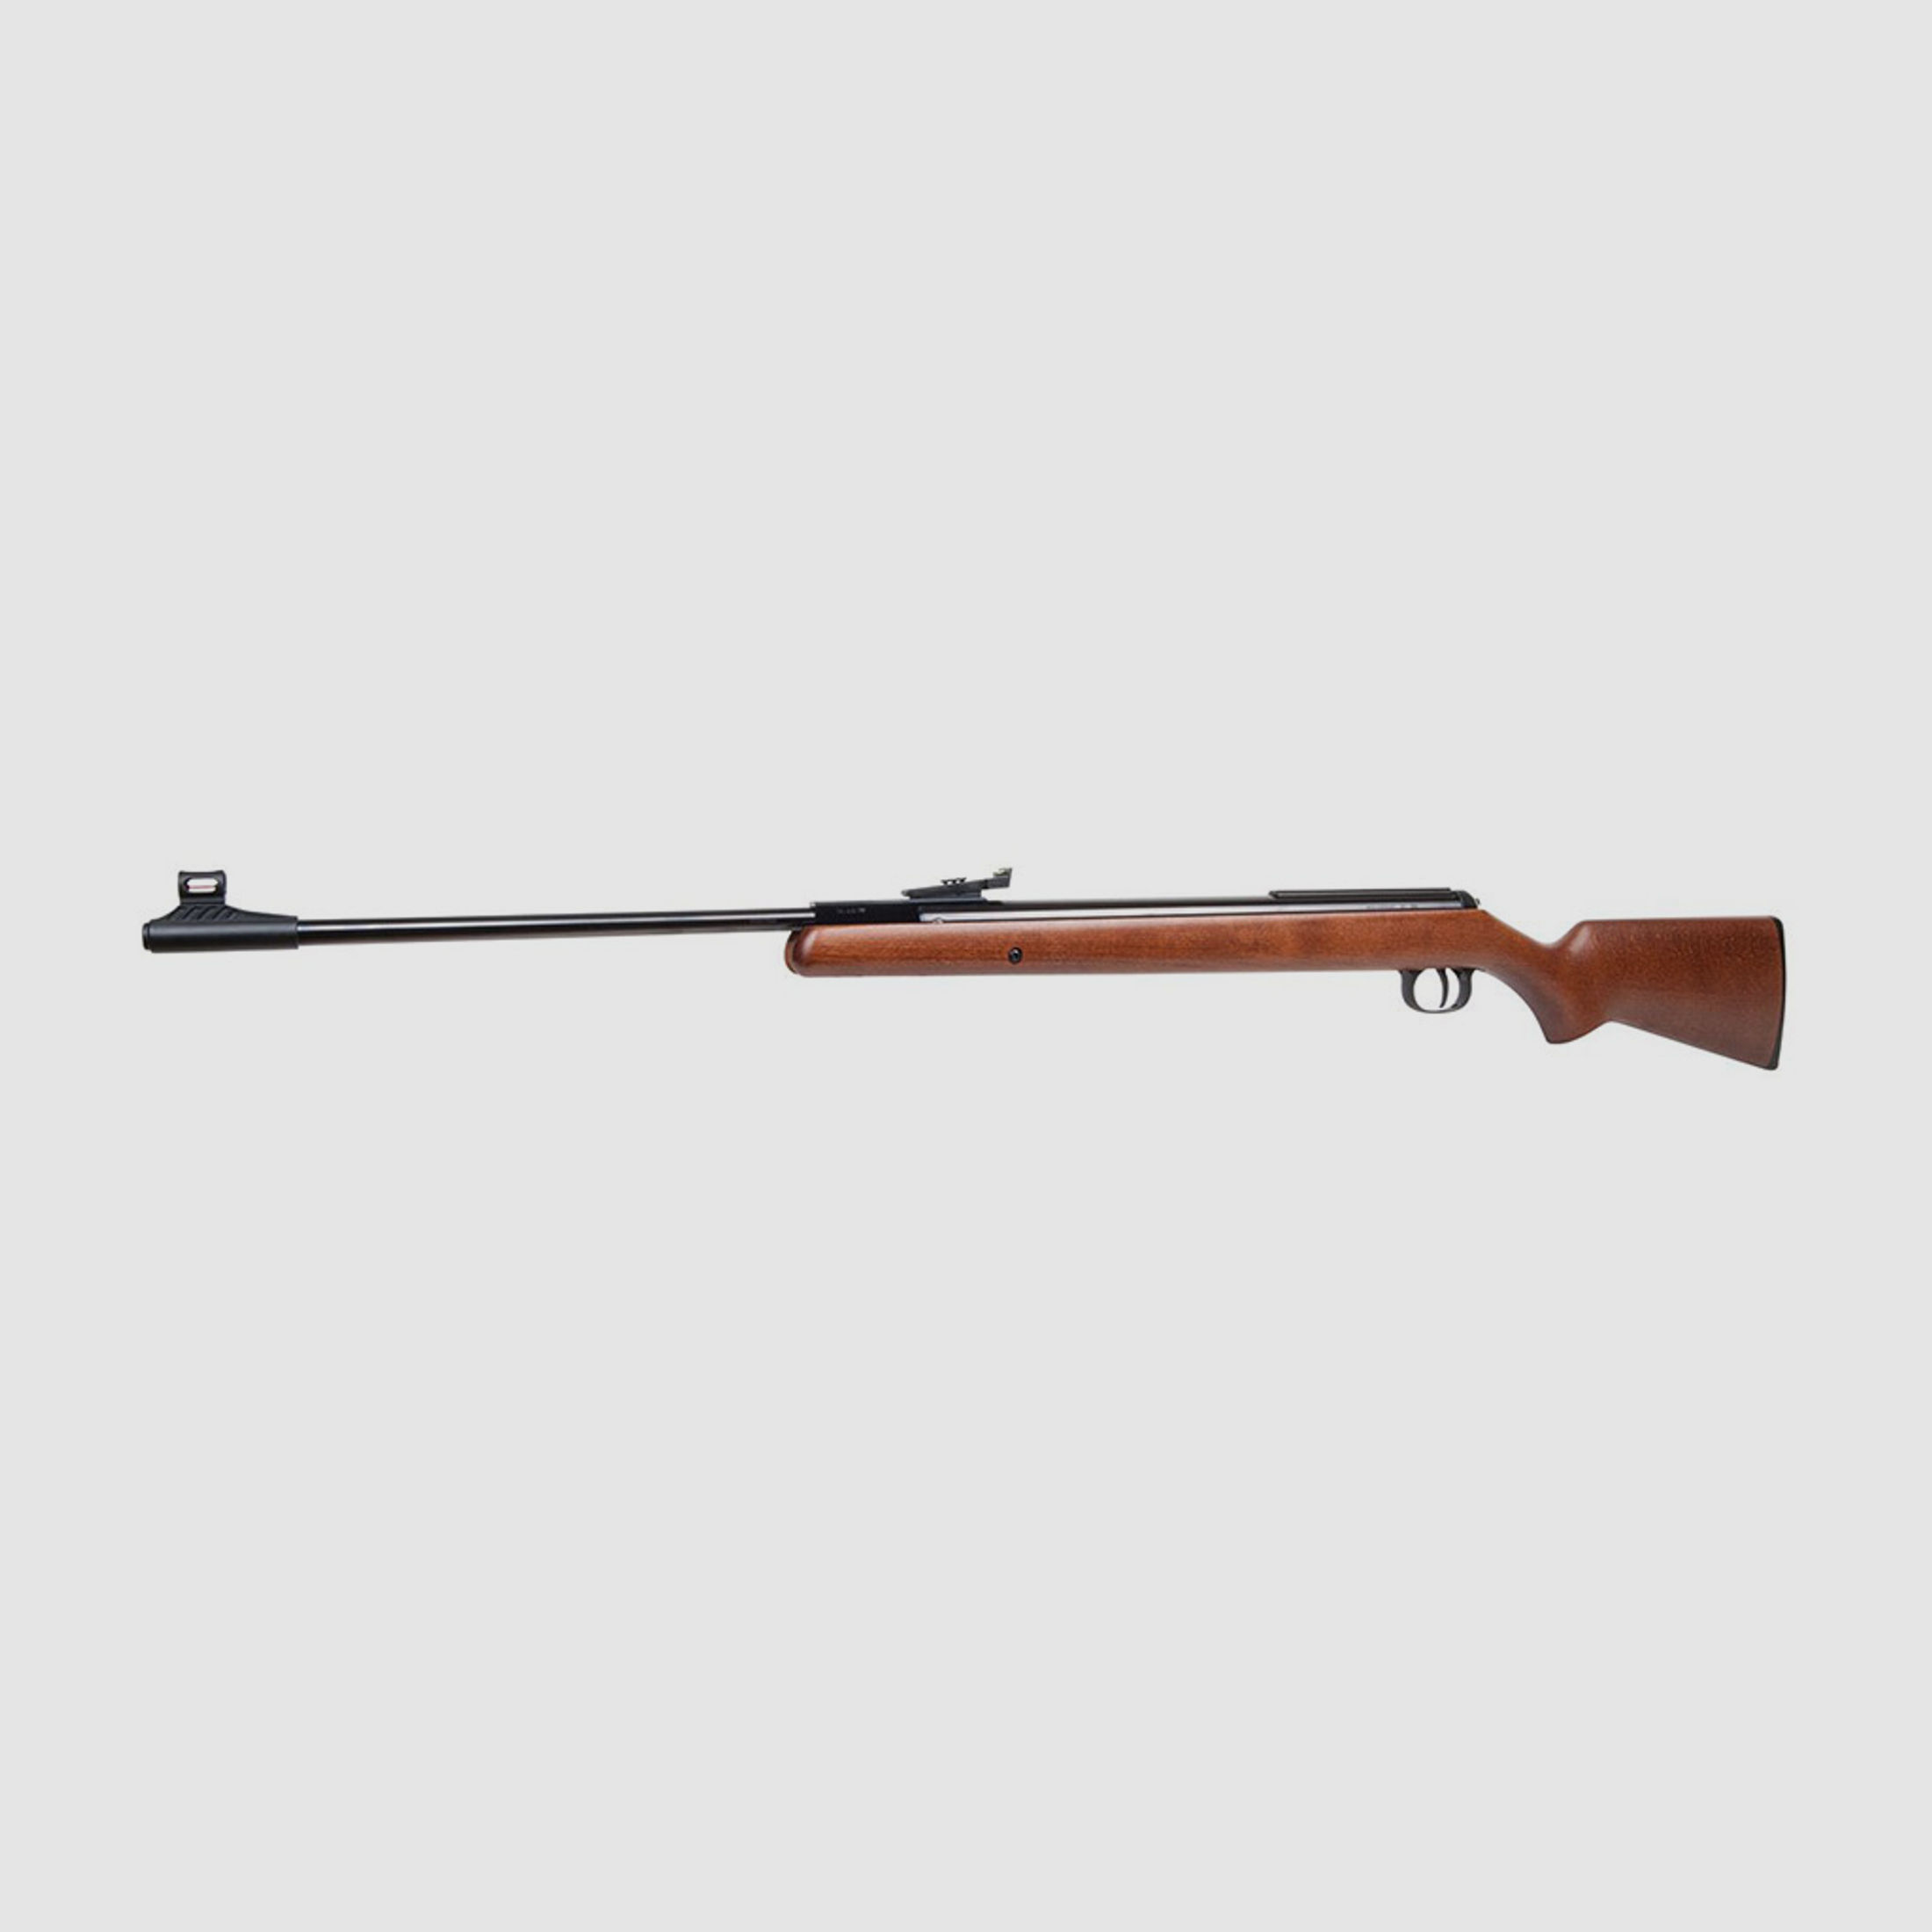 Knicklauf Luftgewehr Diana 350 Magnum Classic Holz Kaliber 5,5 mm (P18)